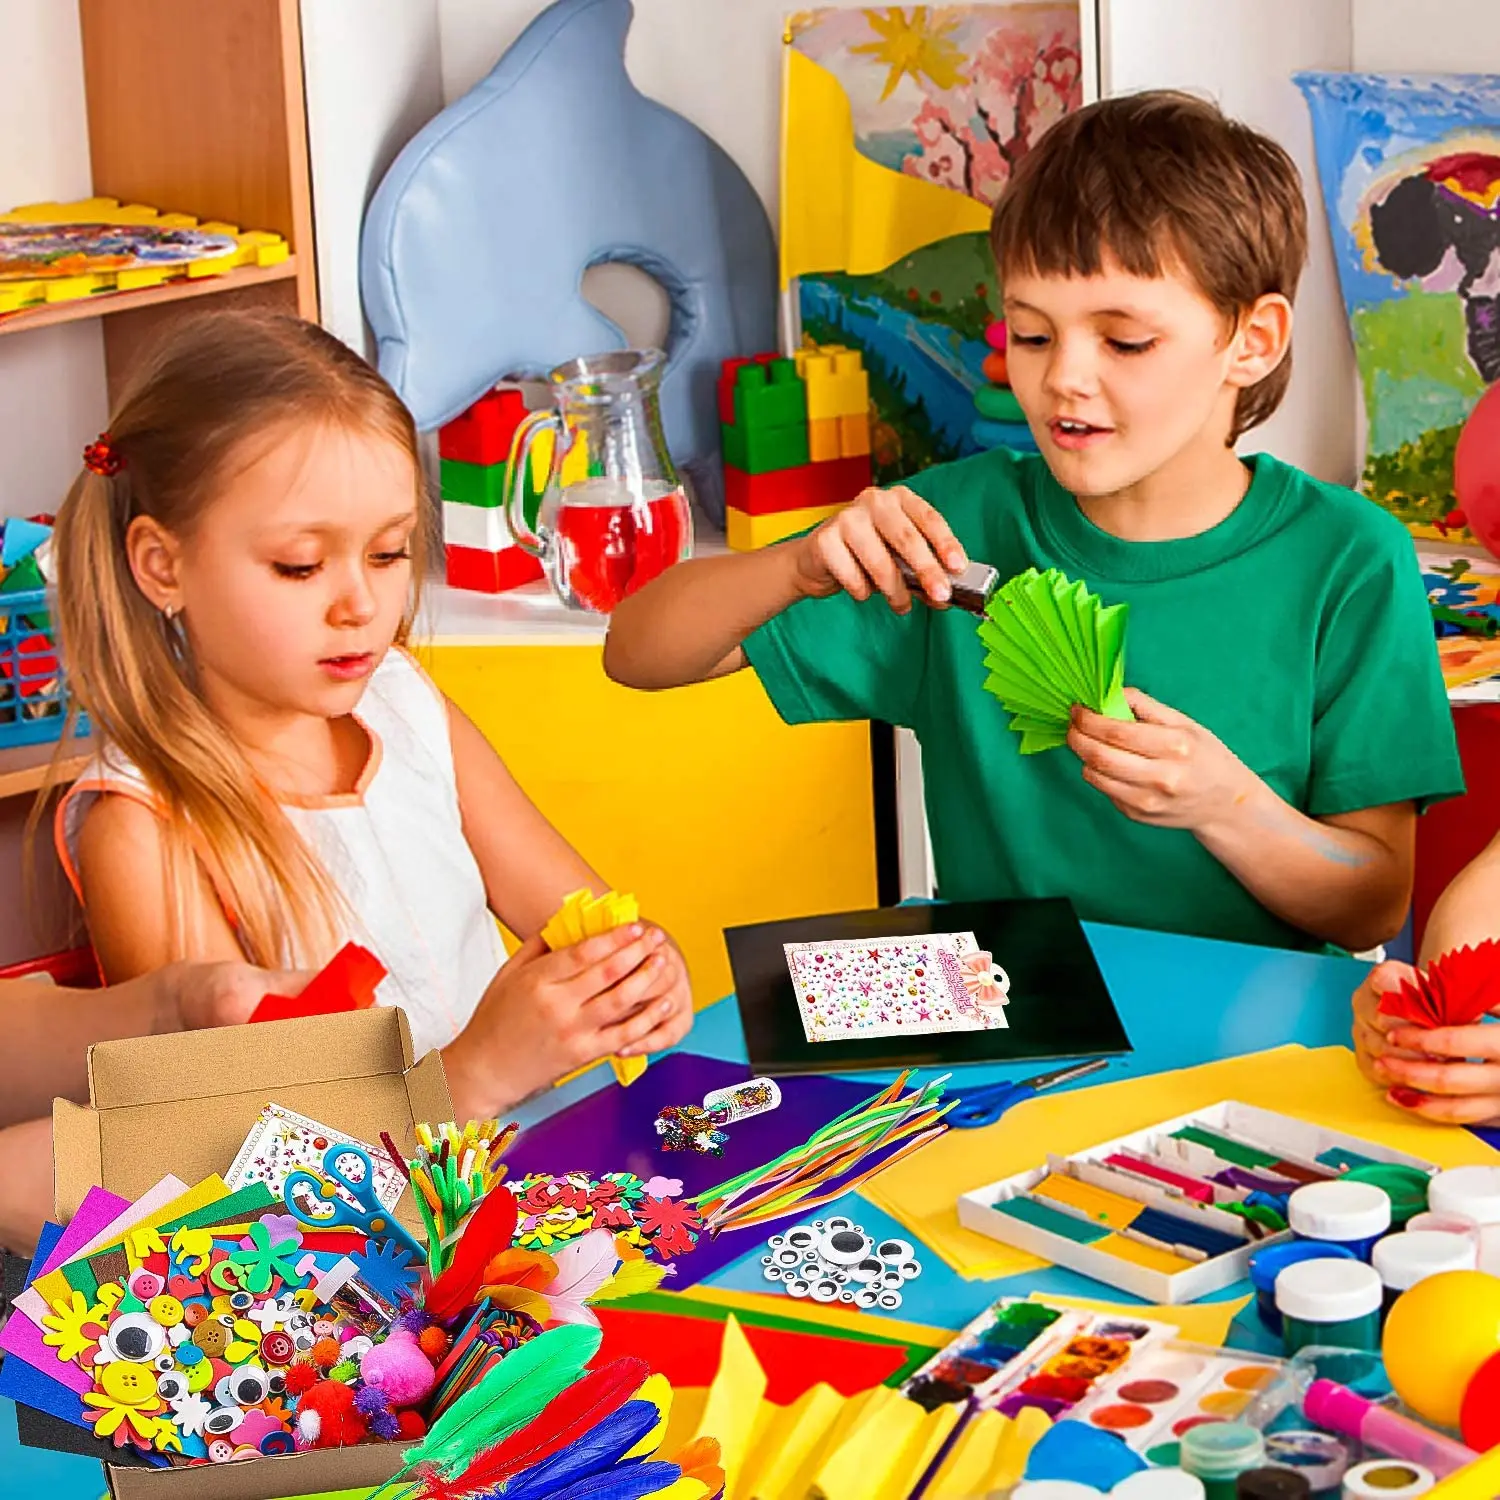 1000pcs DIY Kids Craft Supplies, Art Project, Colorful Felt